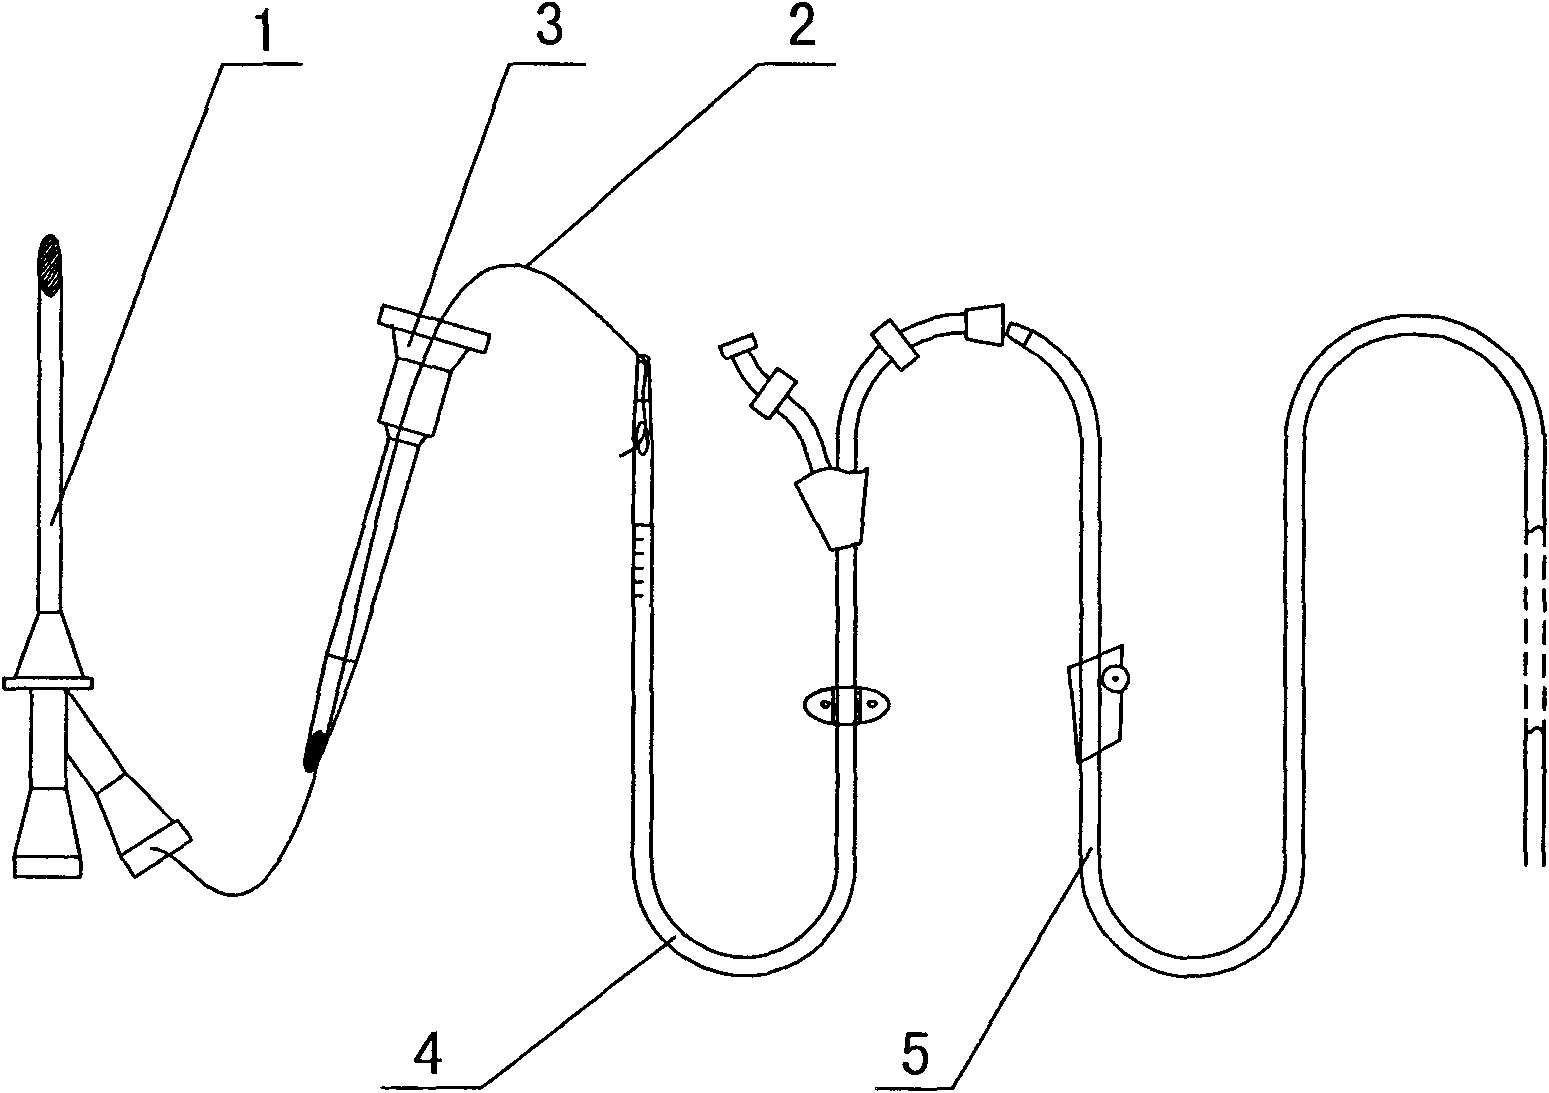 Percutaneous thoracic puncture closed drainage apparatus